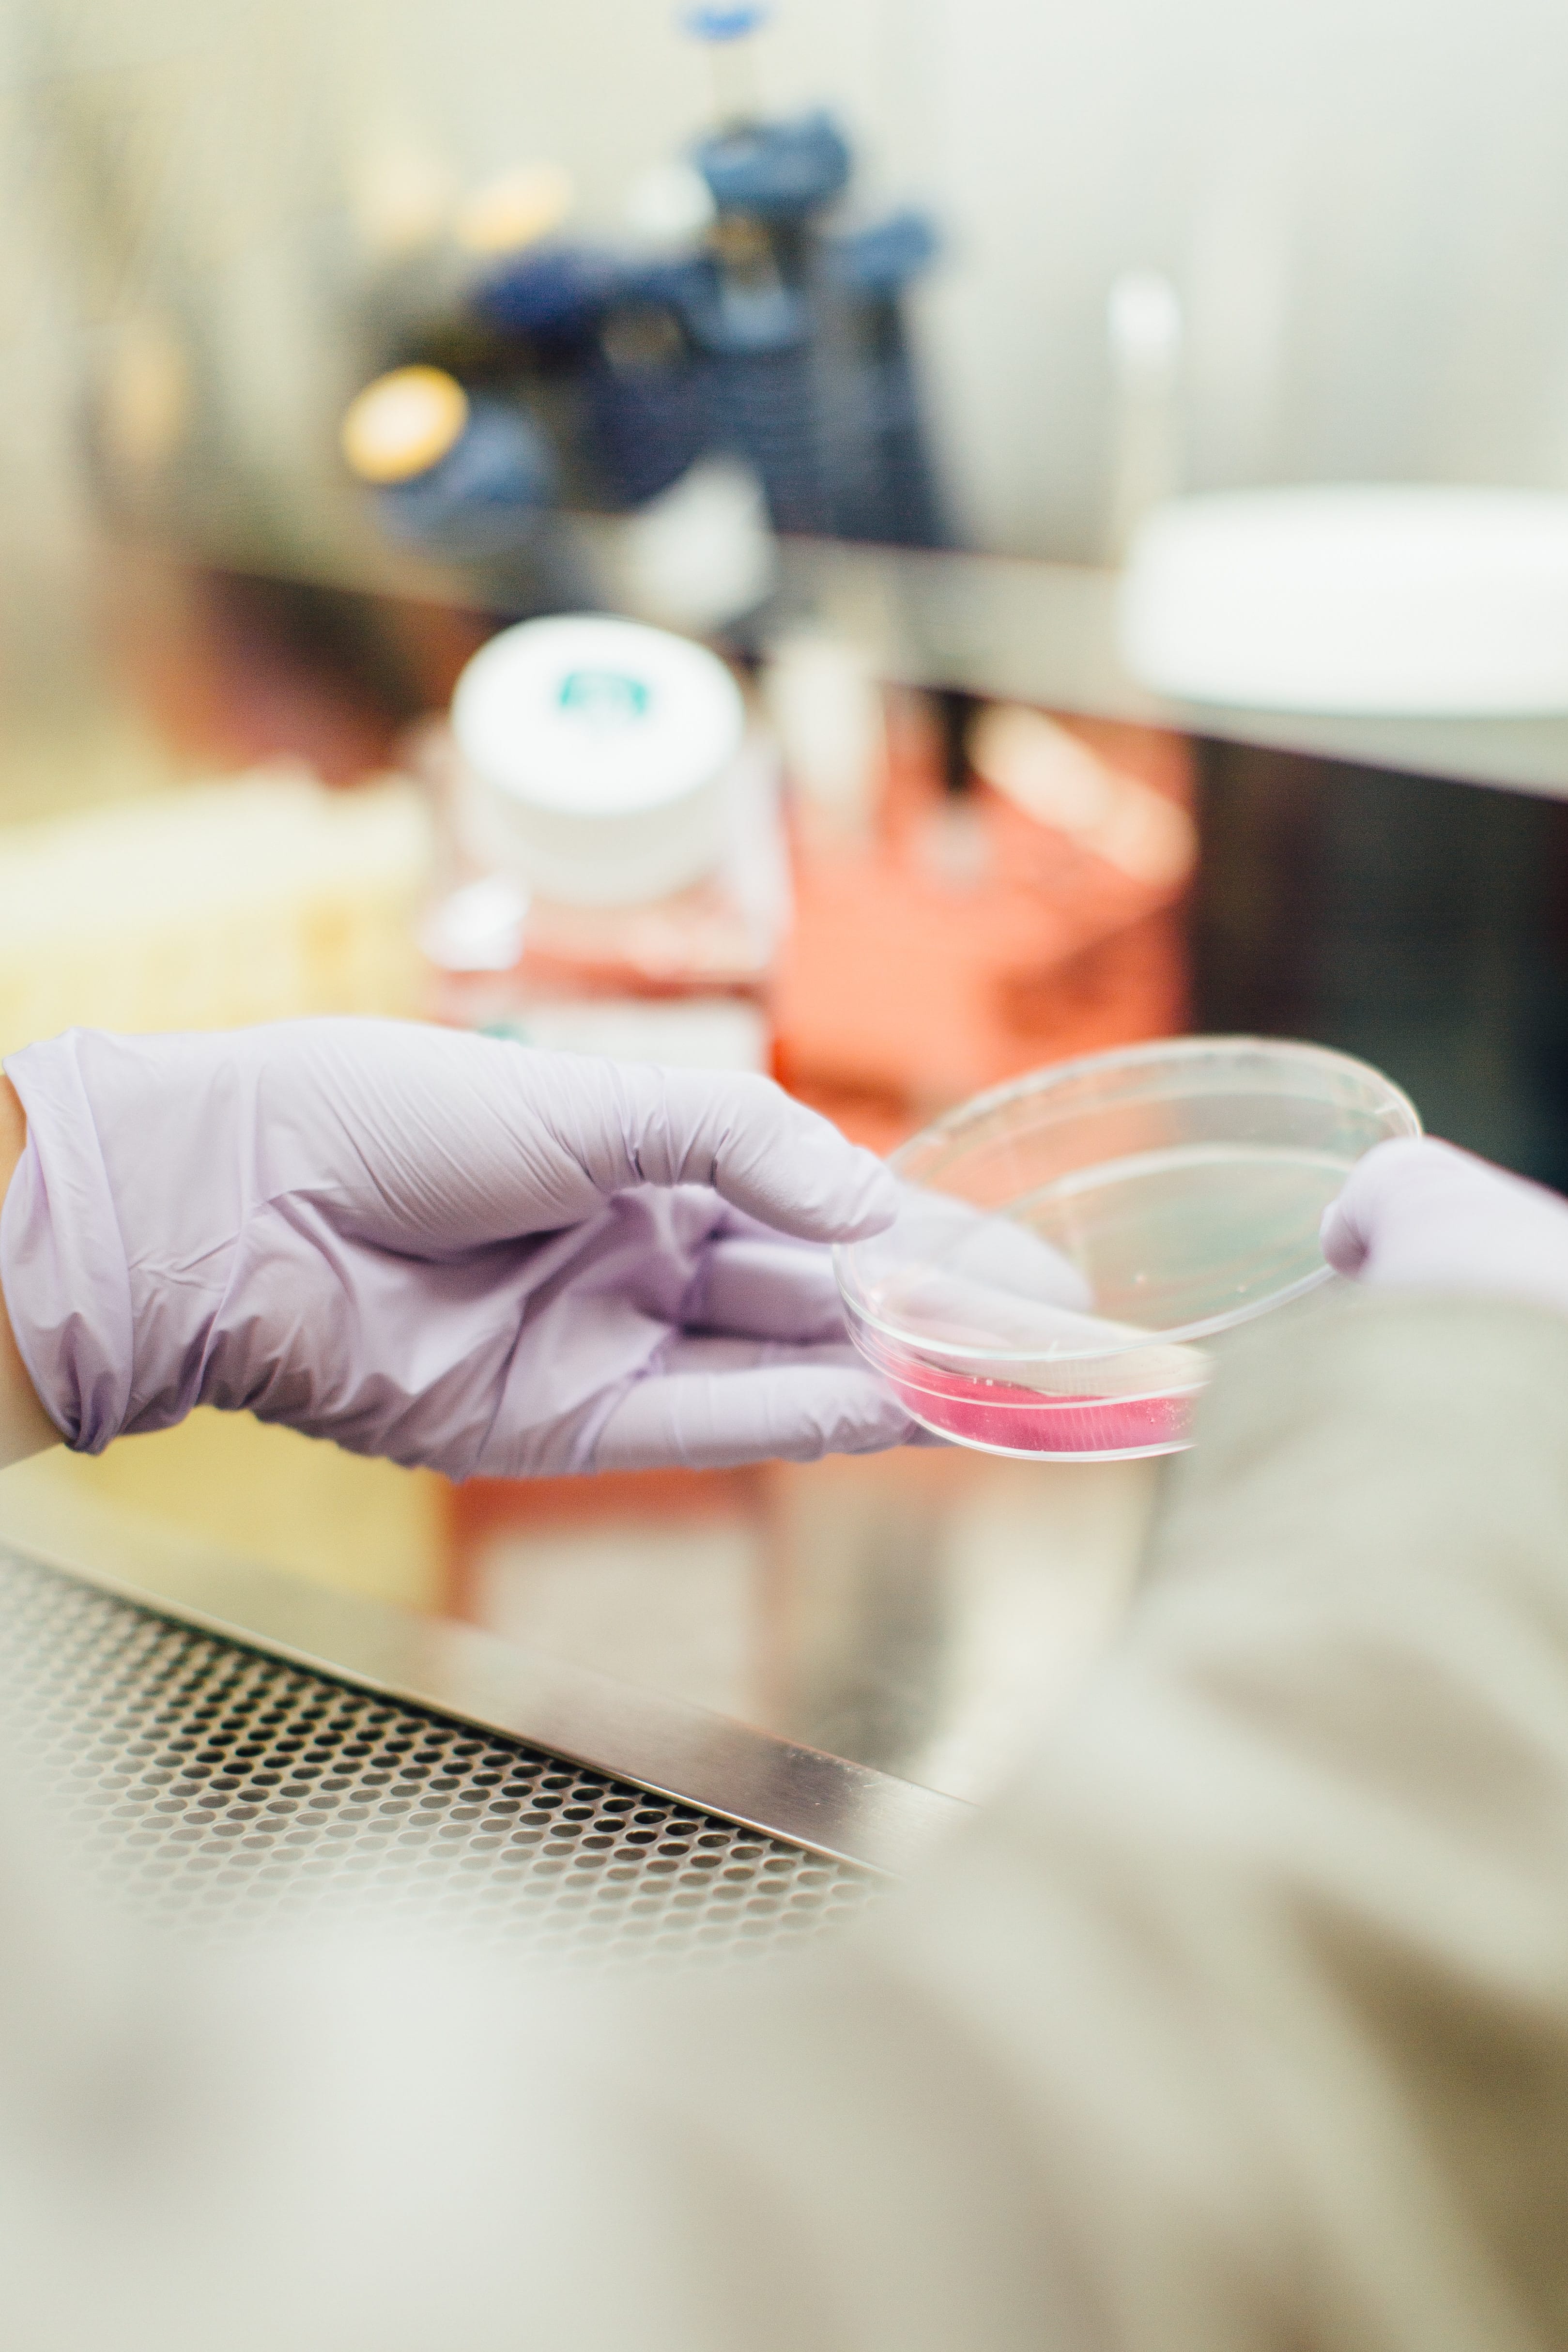 Laboratory worker examining petri dish containing pink substance; image by Drew Hays, via Unsplash.com.